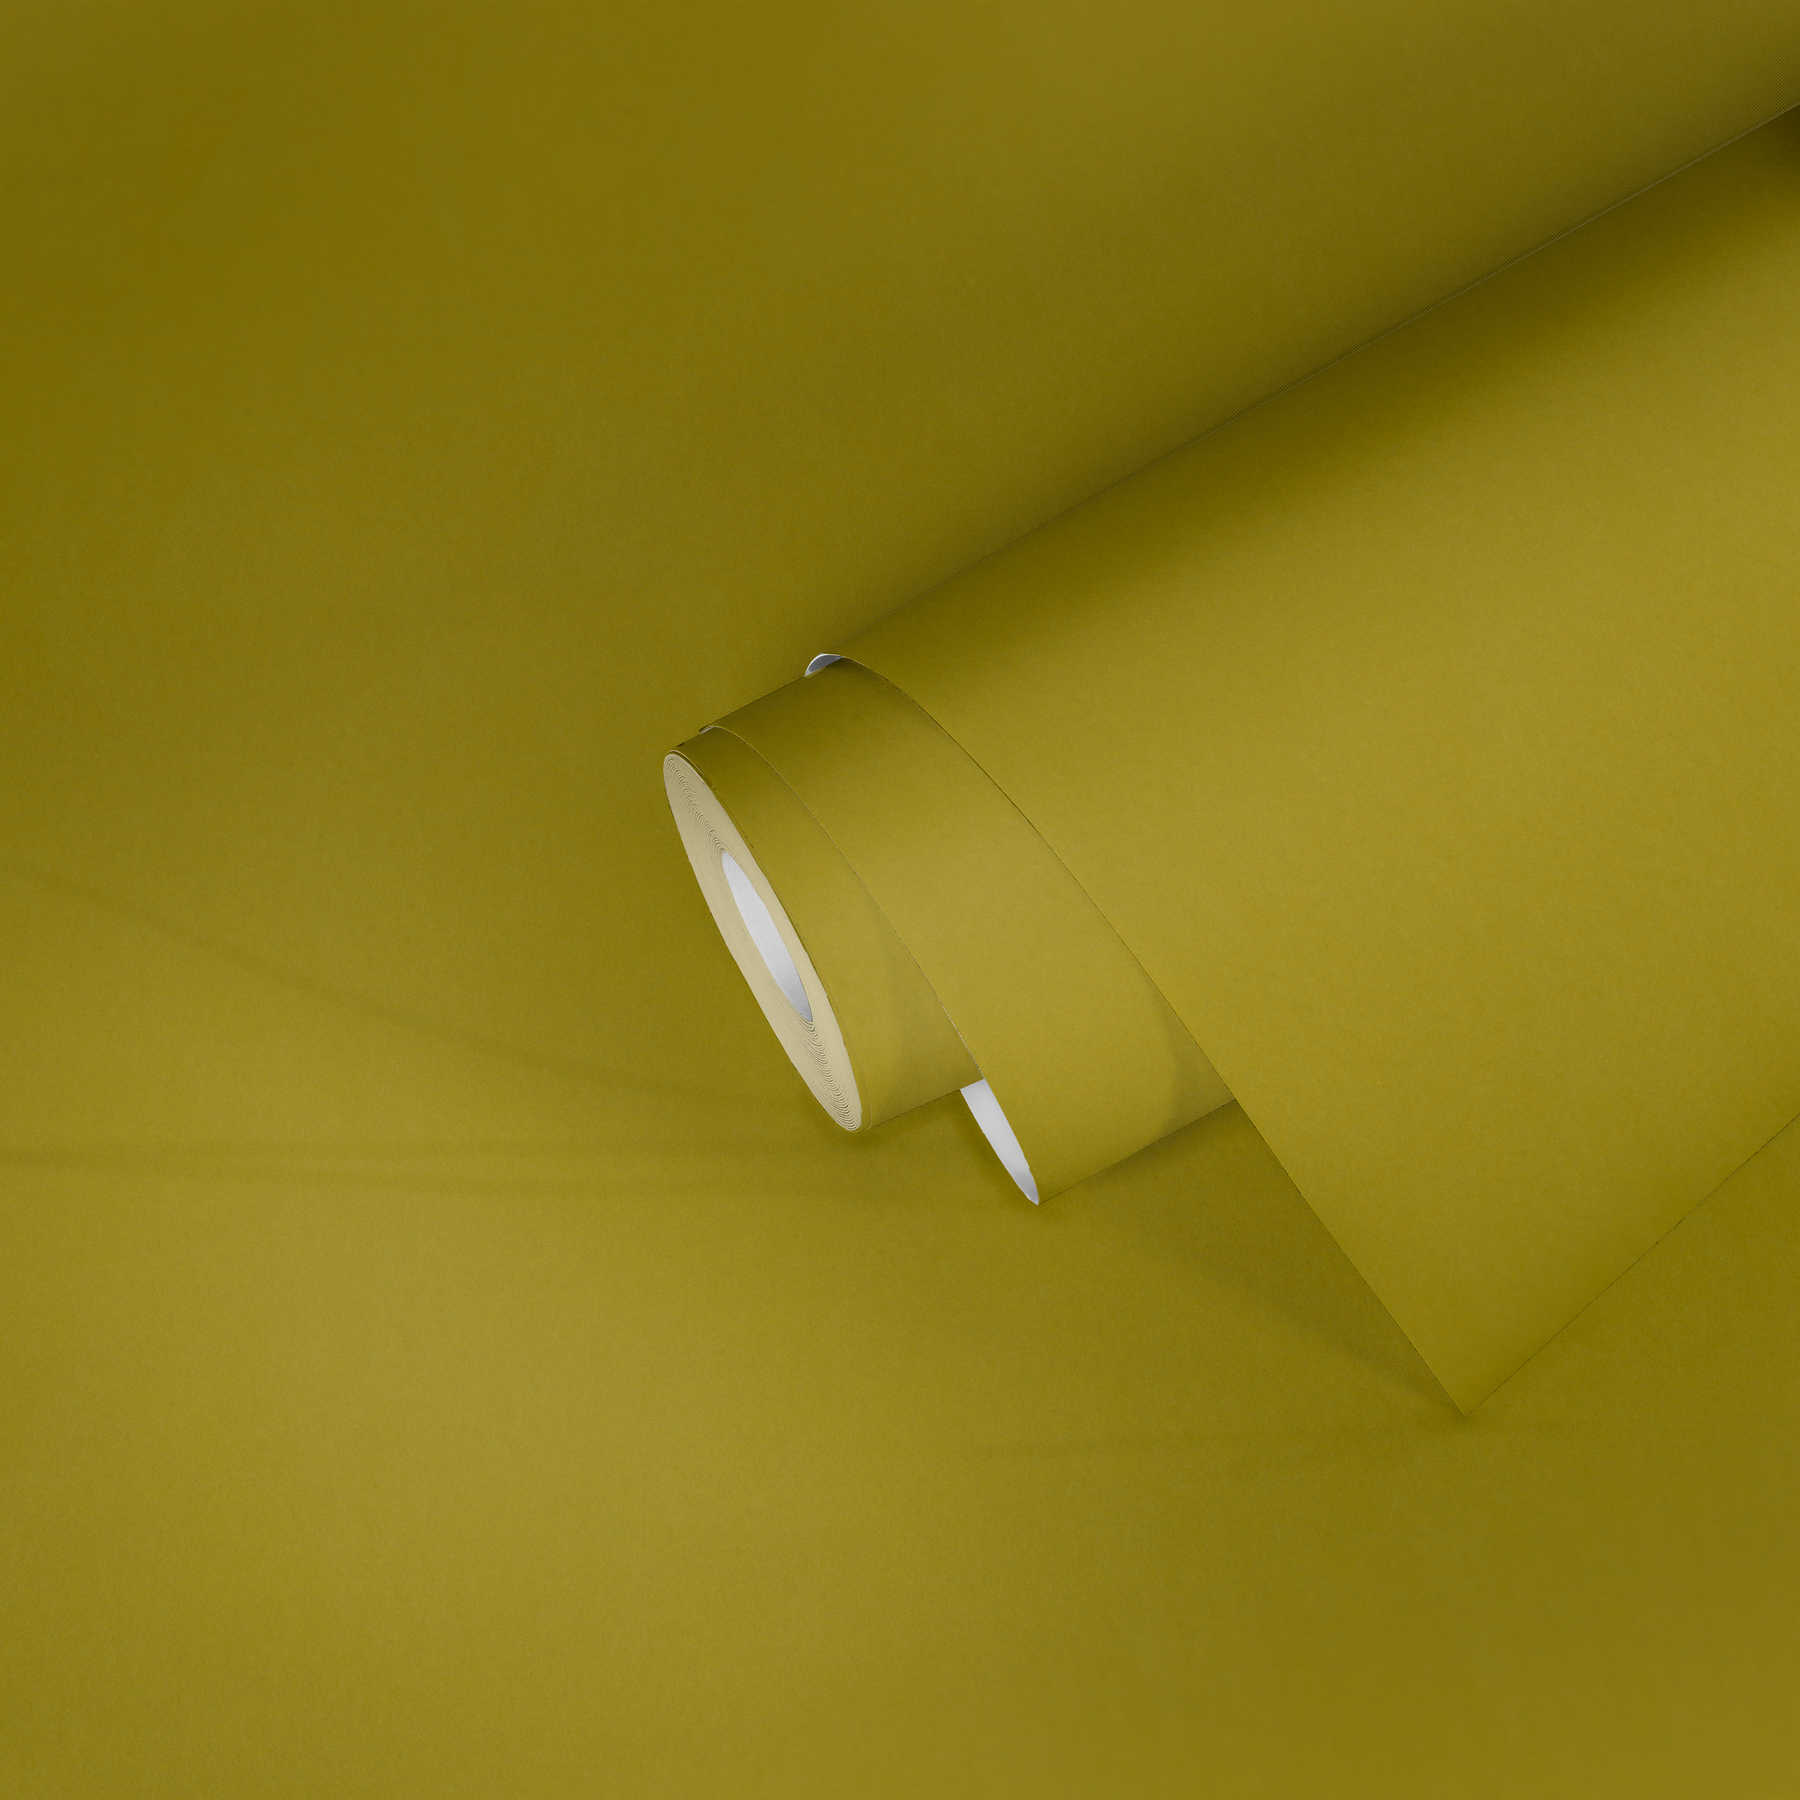             Green non-woven wallpaper plain, matt with smooth surface
        